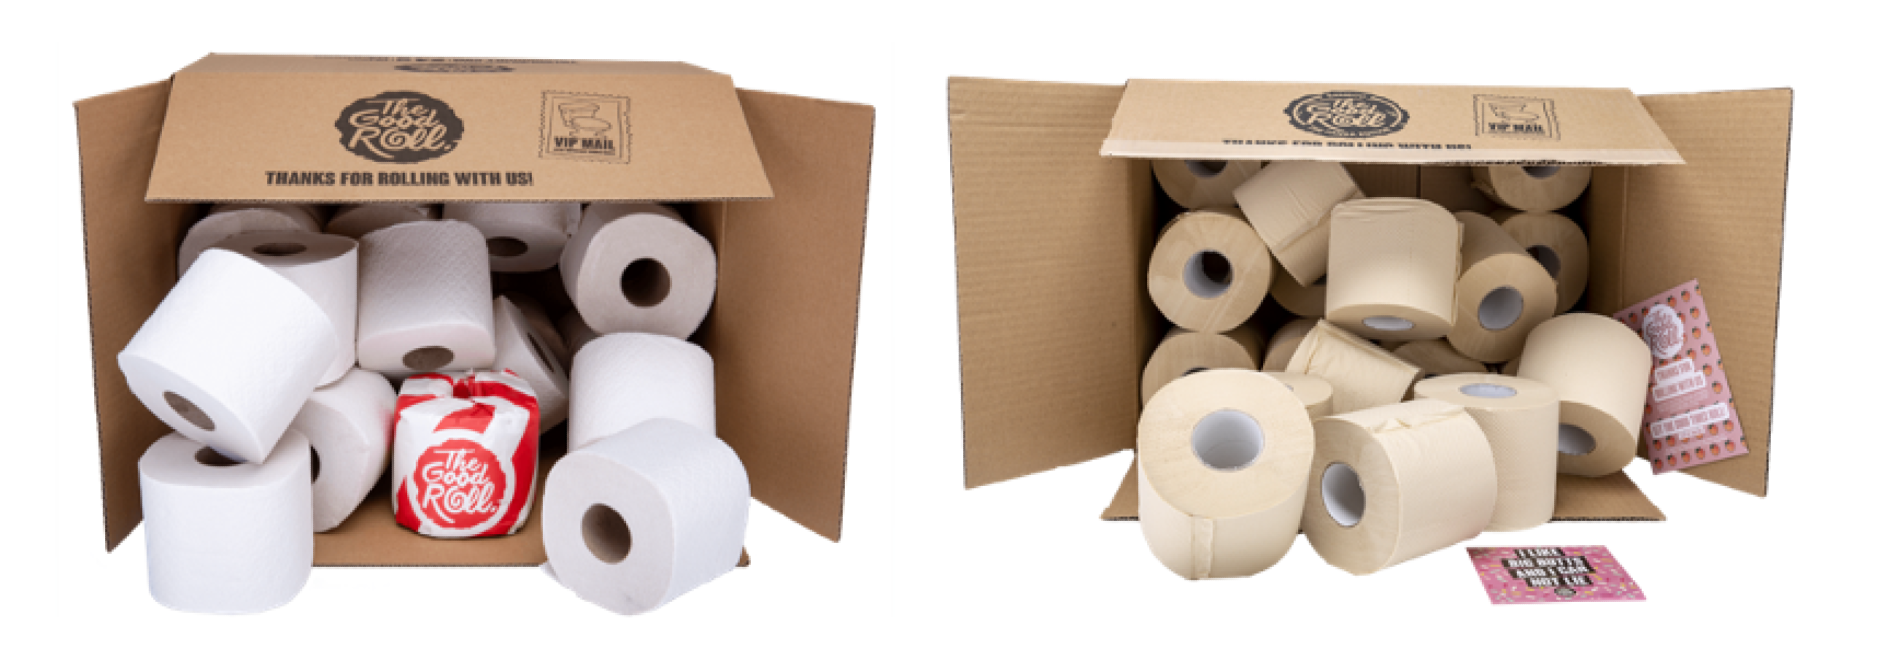 Designer Toilet Paper - 3 Quarks Daily